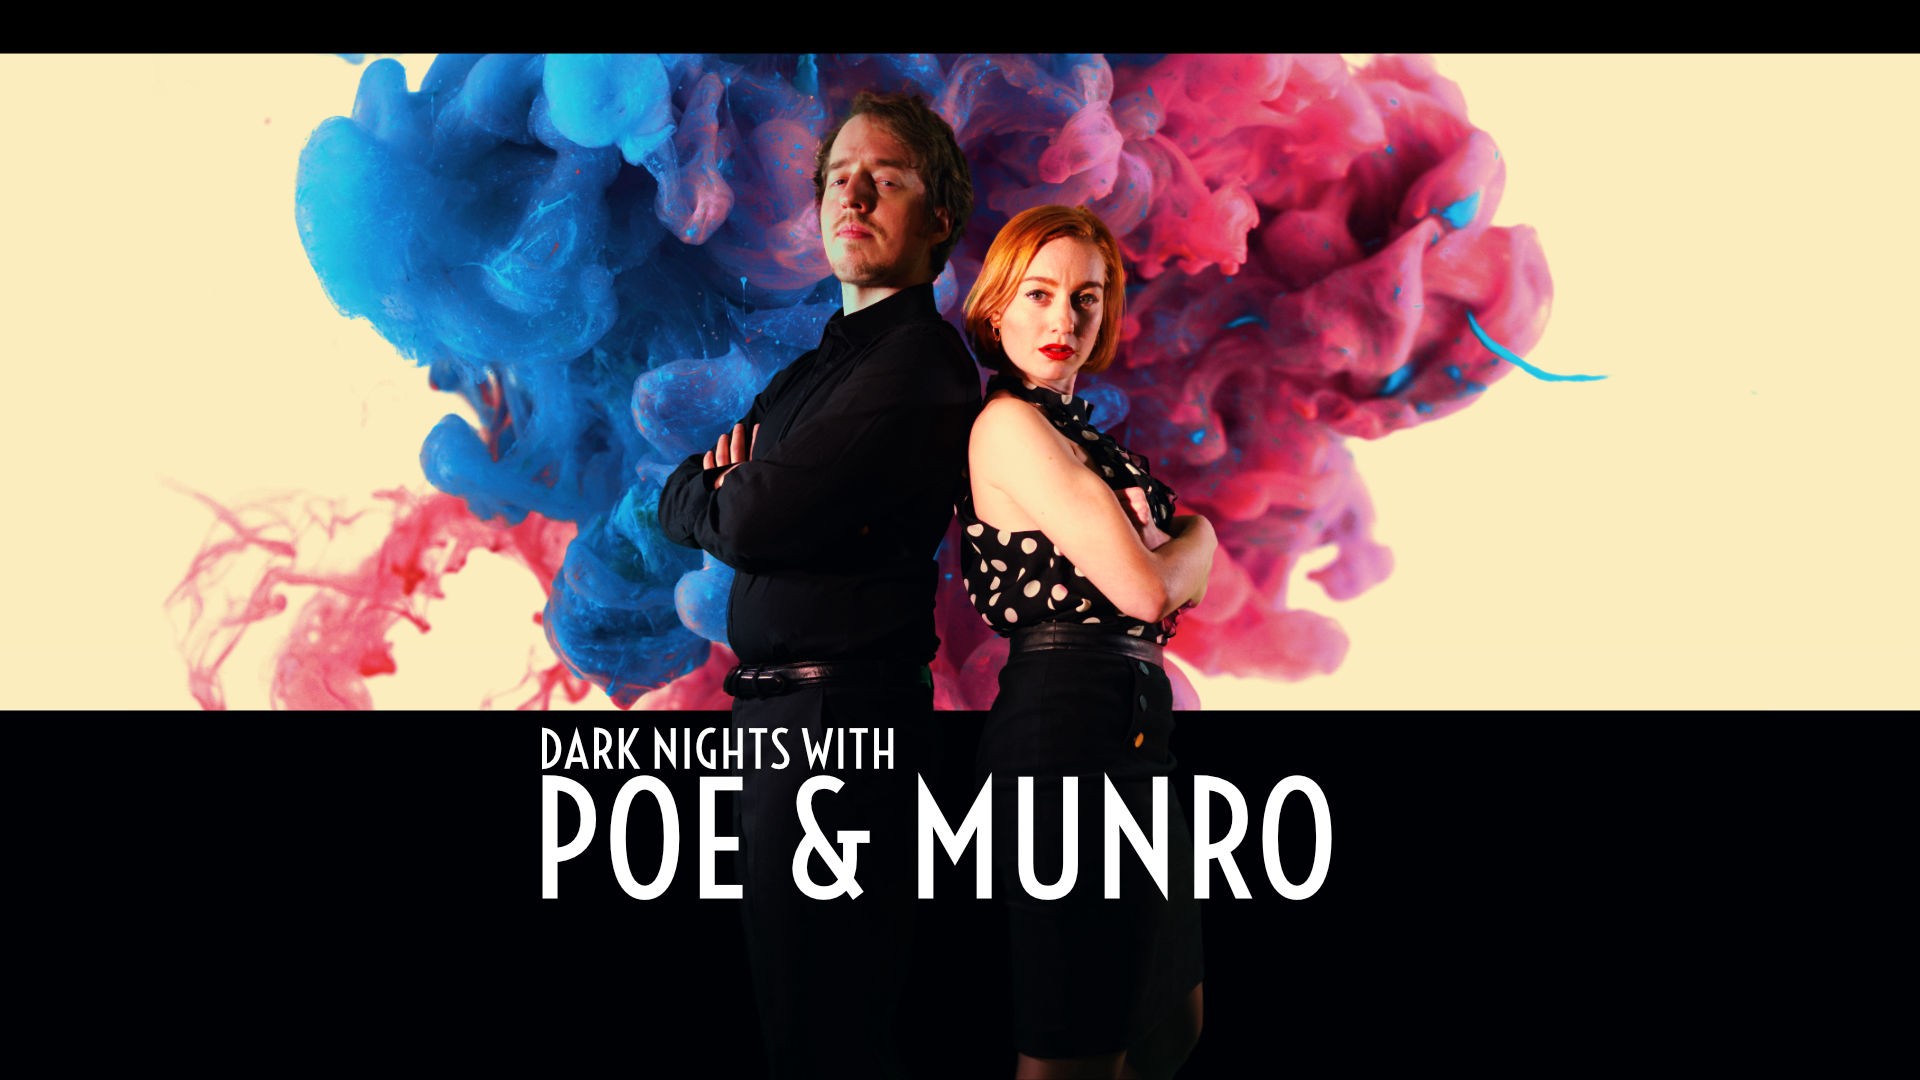 Poe and Munro